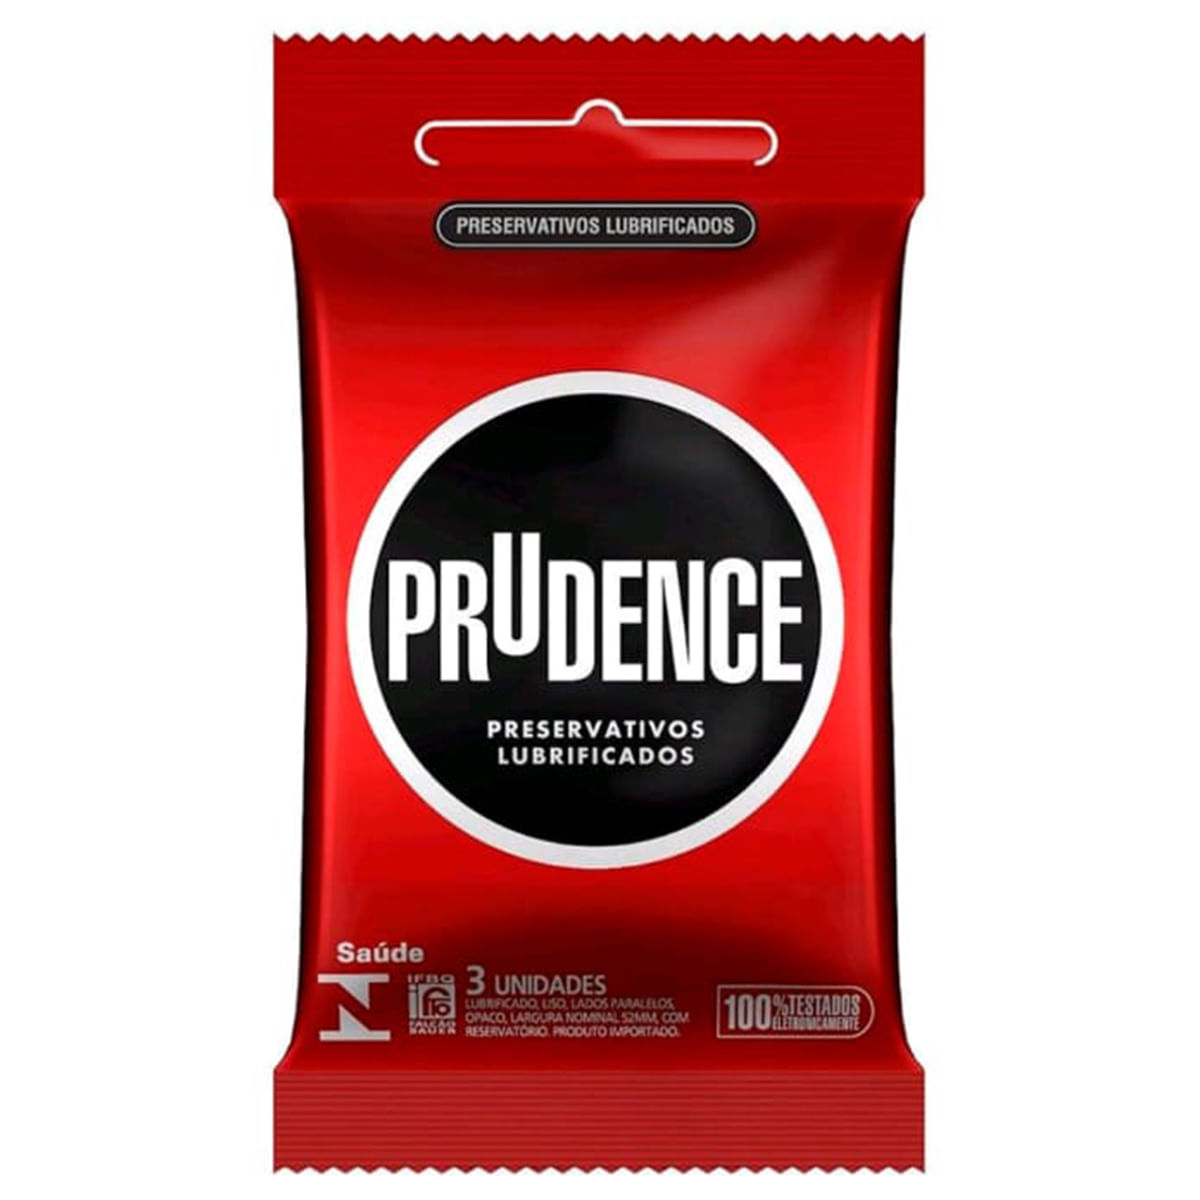 Preservativos Lubrificados Prudence - Miess